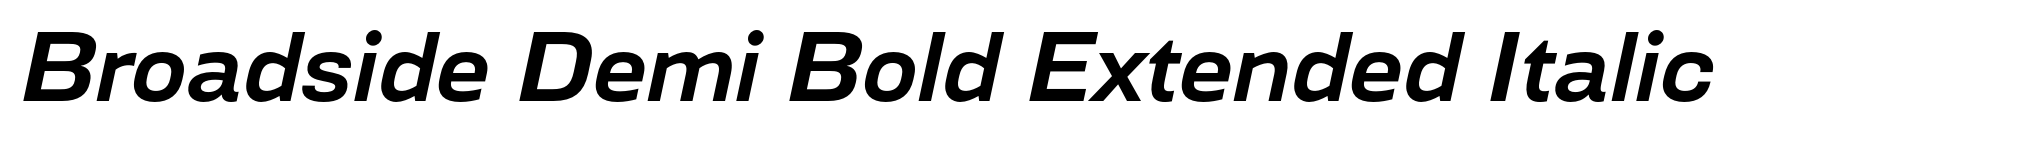 Broadside Demi Bold Extended Italic image